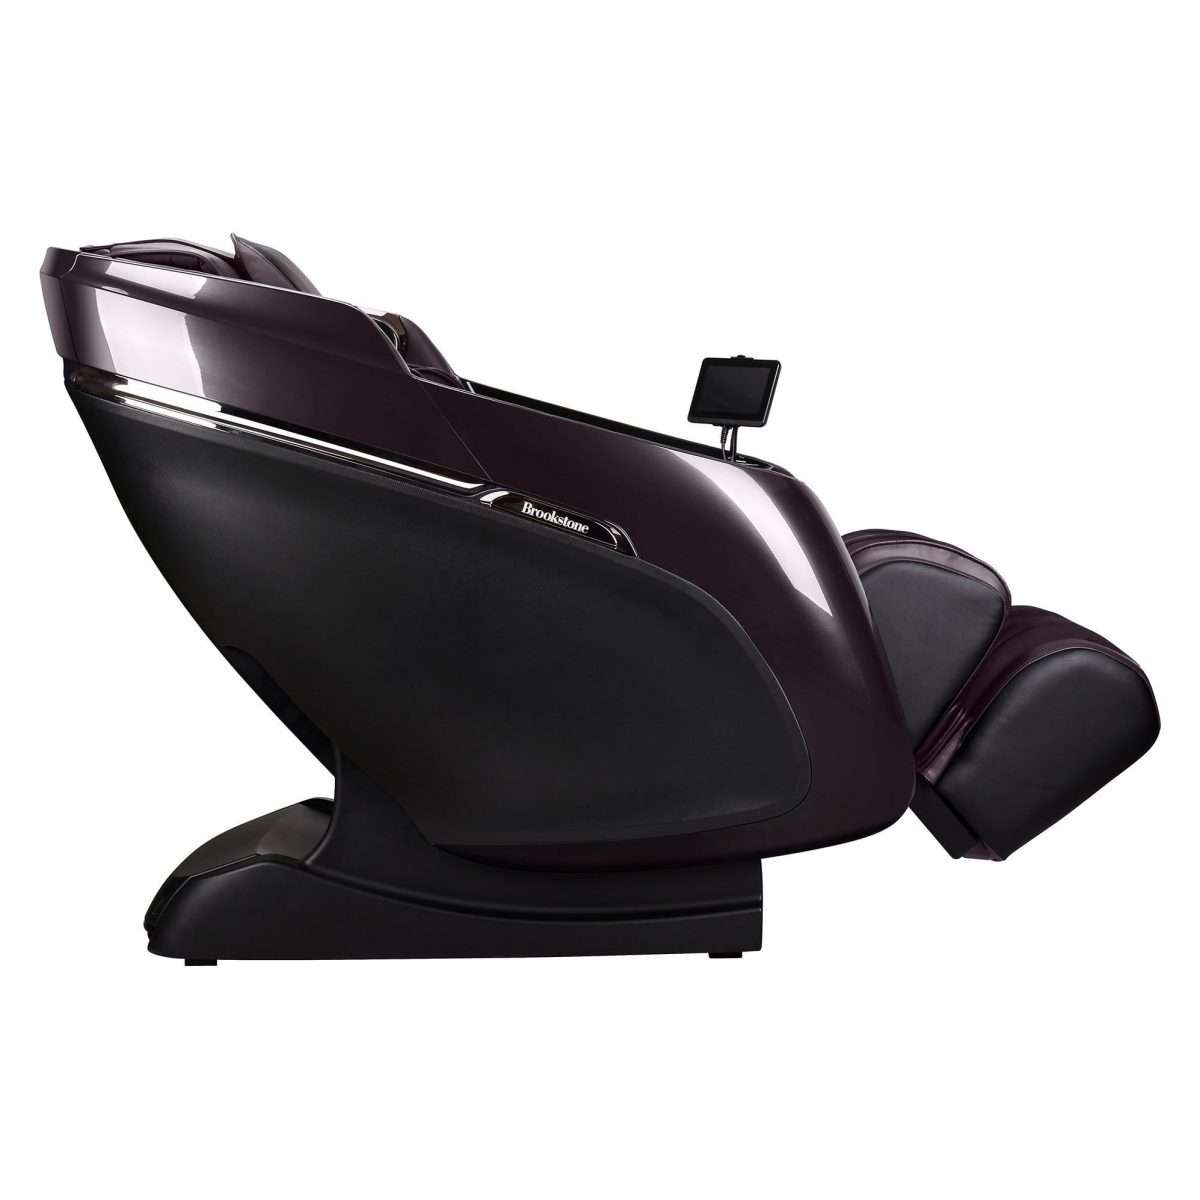 Brookstone Mach IX Massage Chair BK